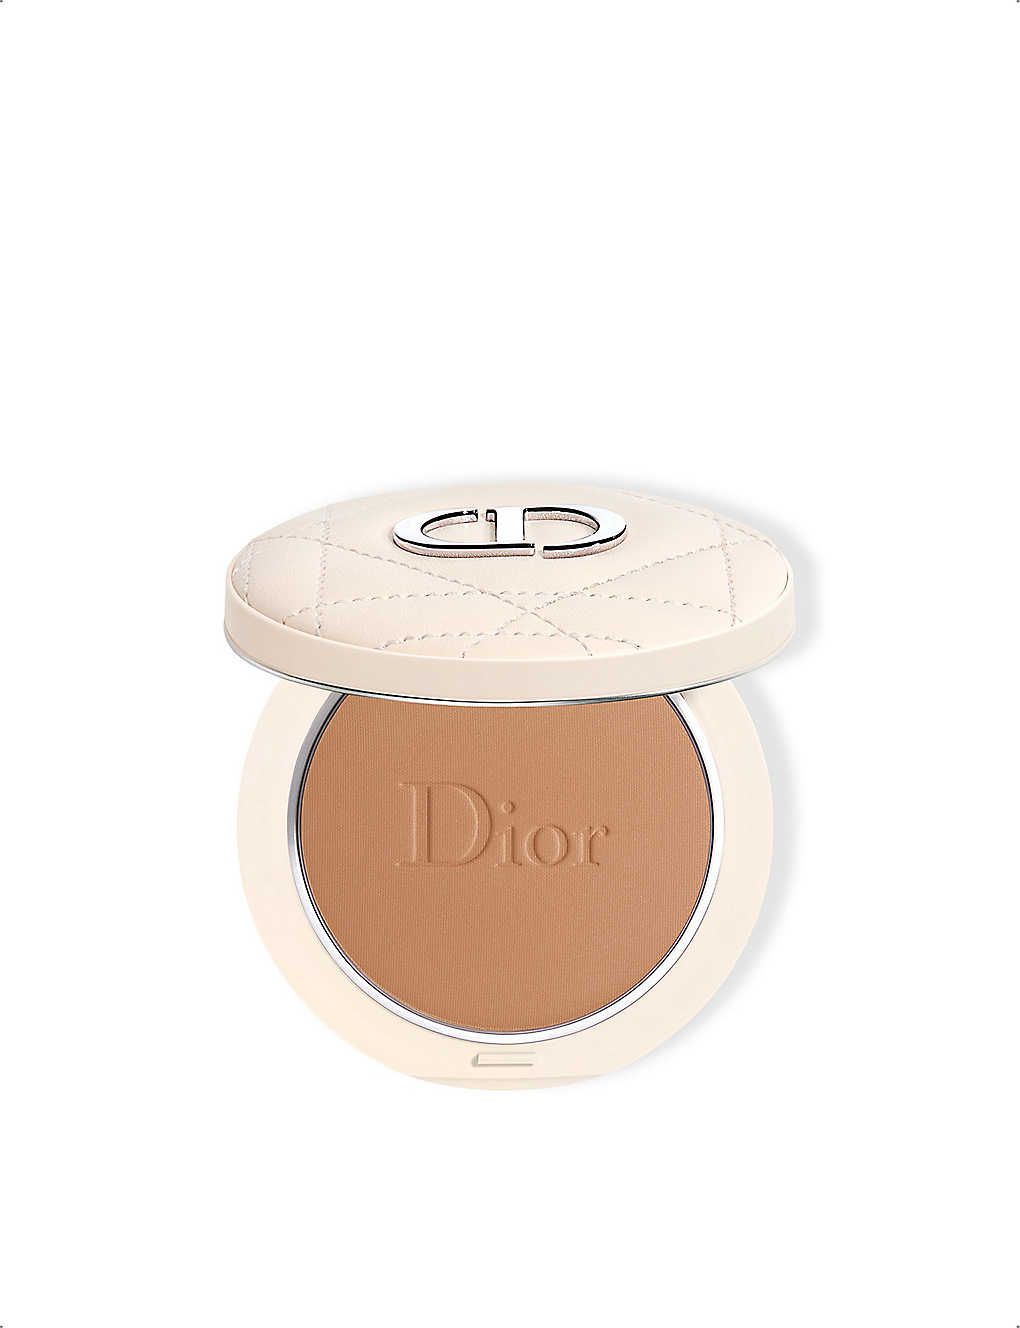 Dior Forever Natural Bronze powder 9g | Selfridges